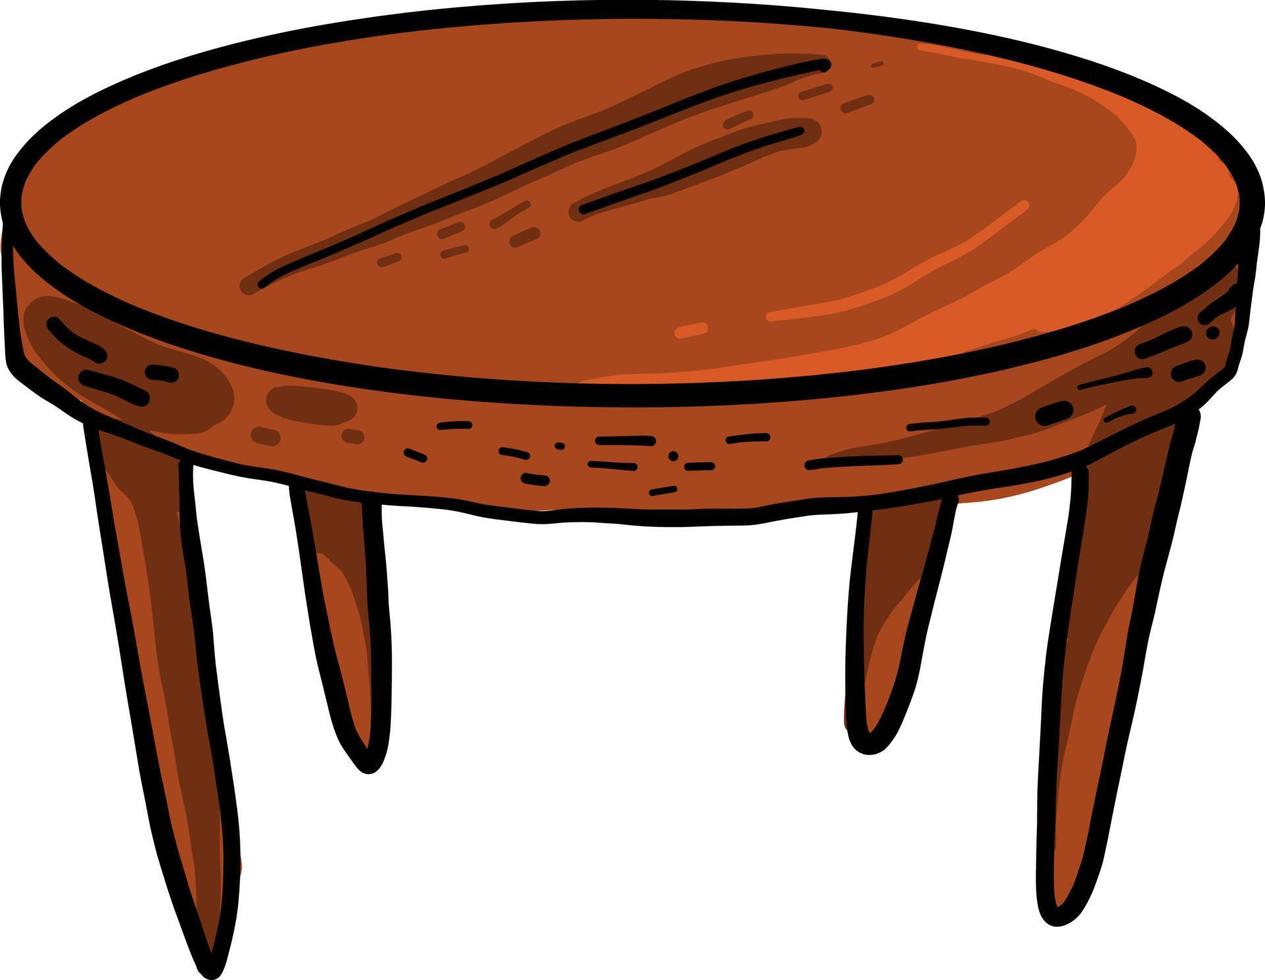 mesa redonda de madera, ilustración, vector sobre fondo blanco